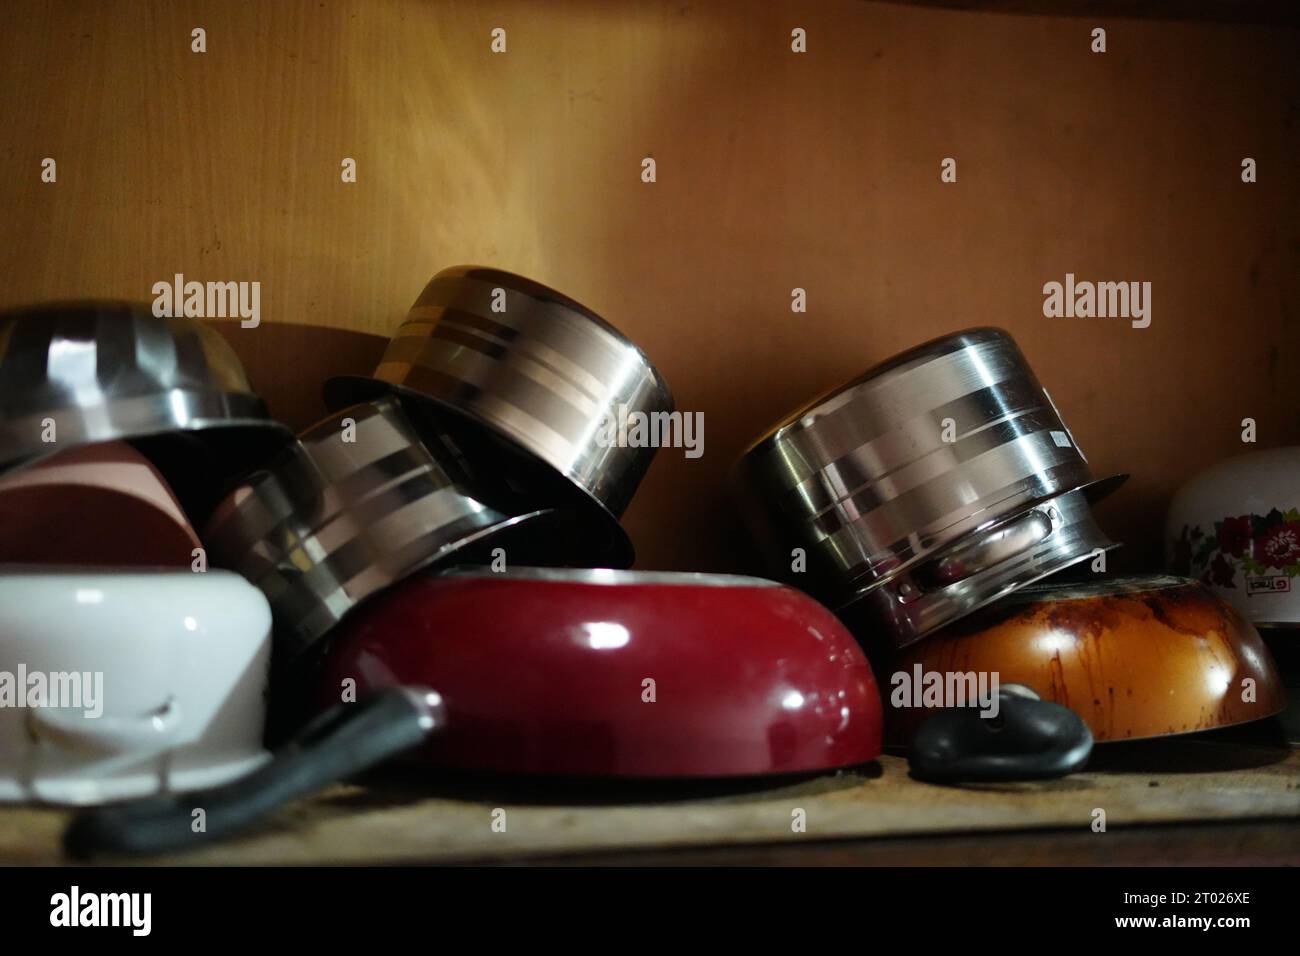 Kitchen utensils used in houses in kerala Stock Photo